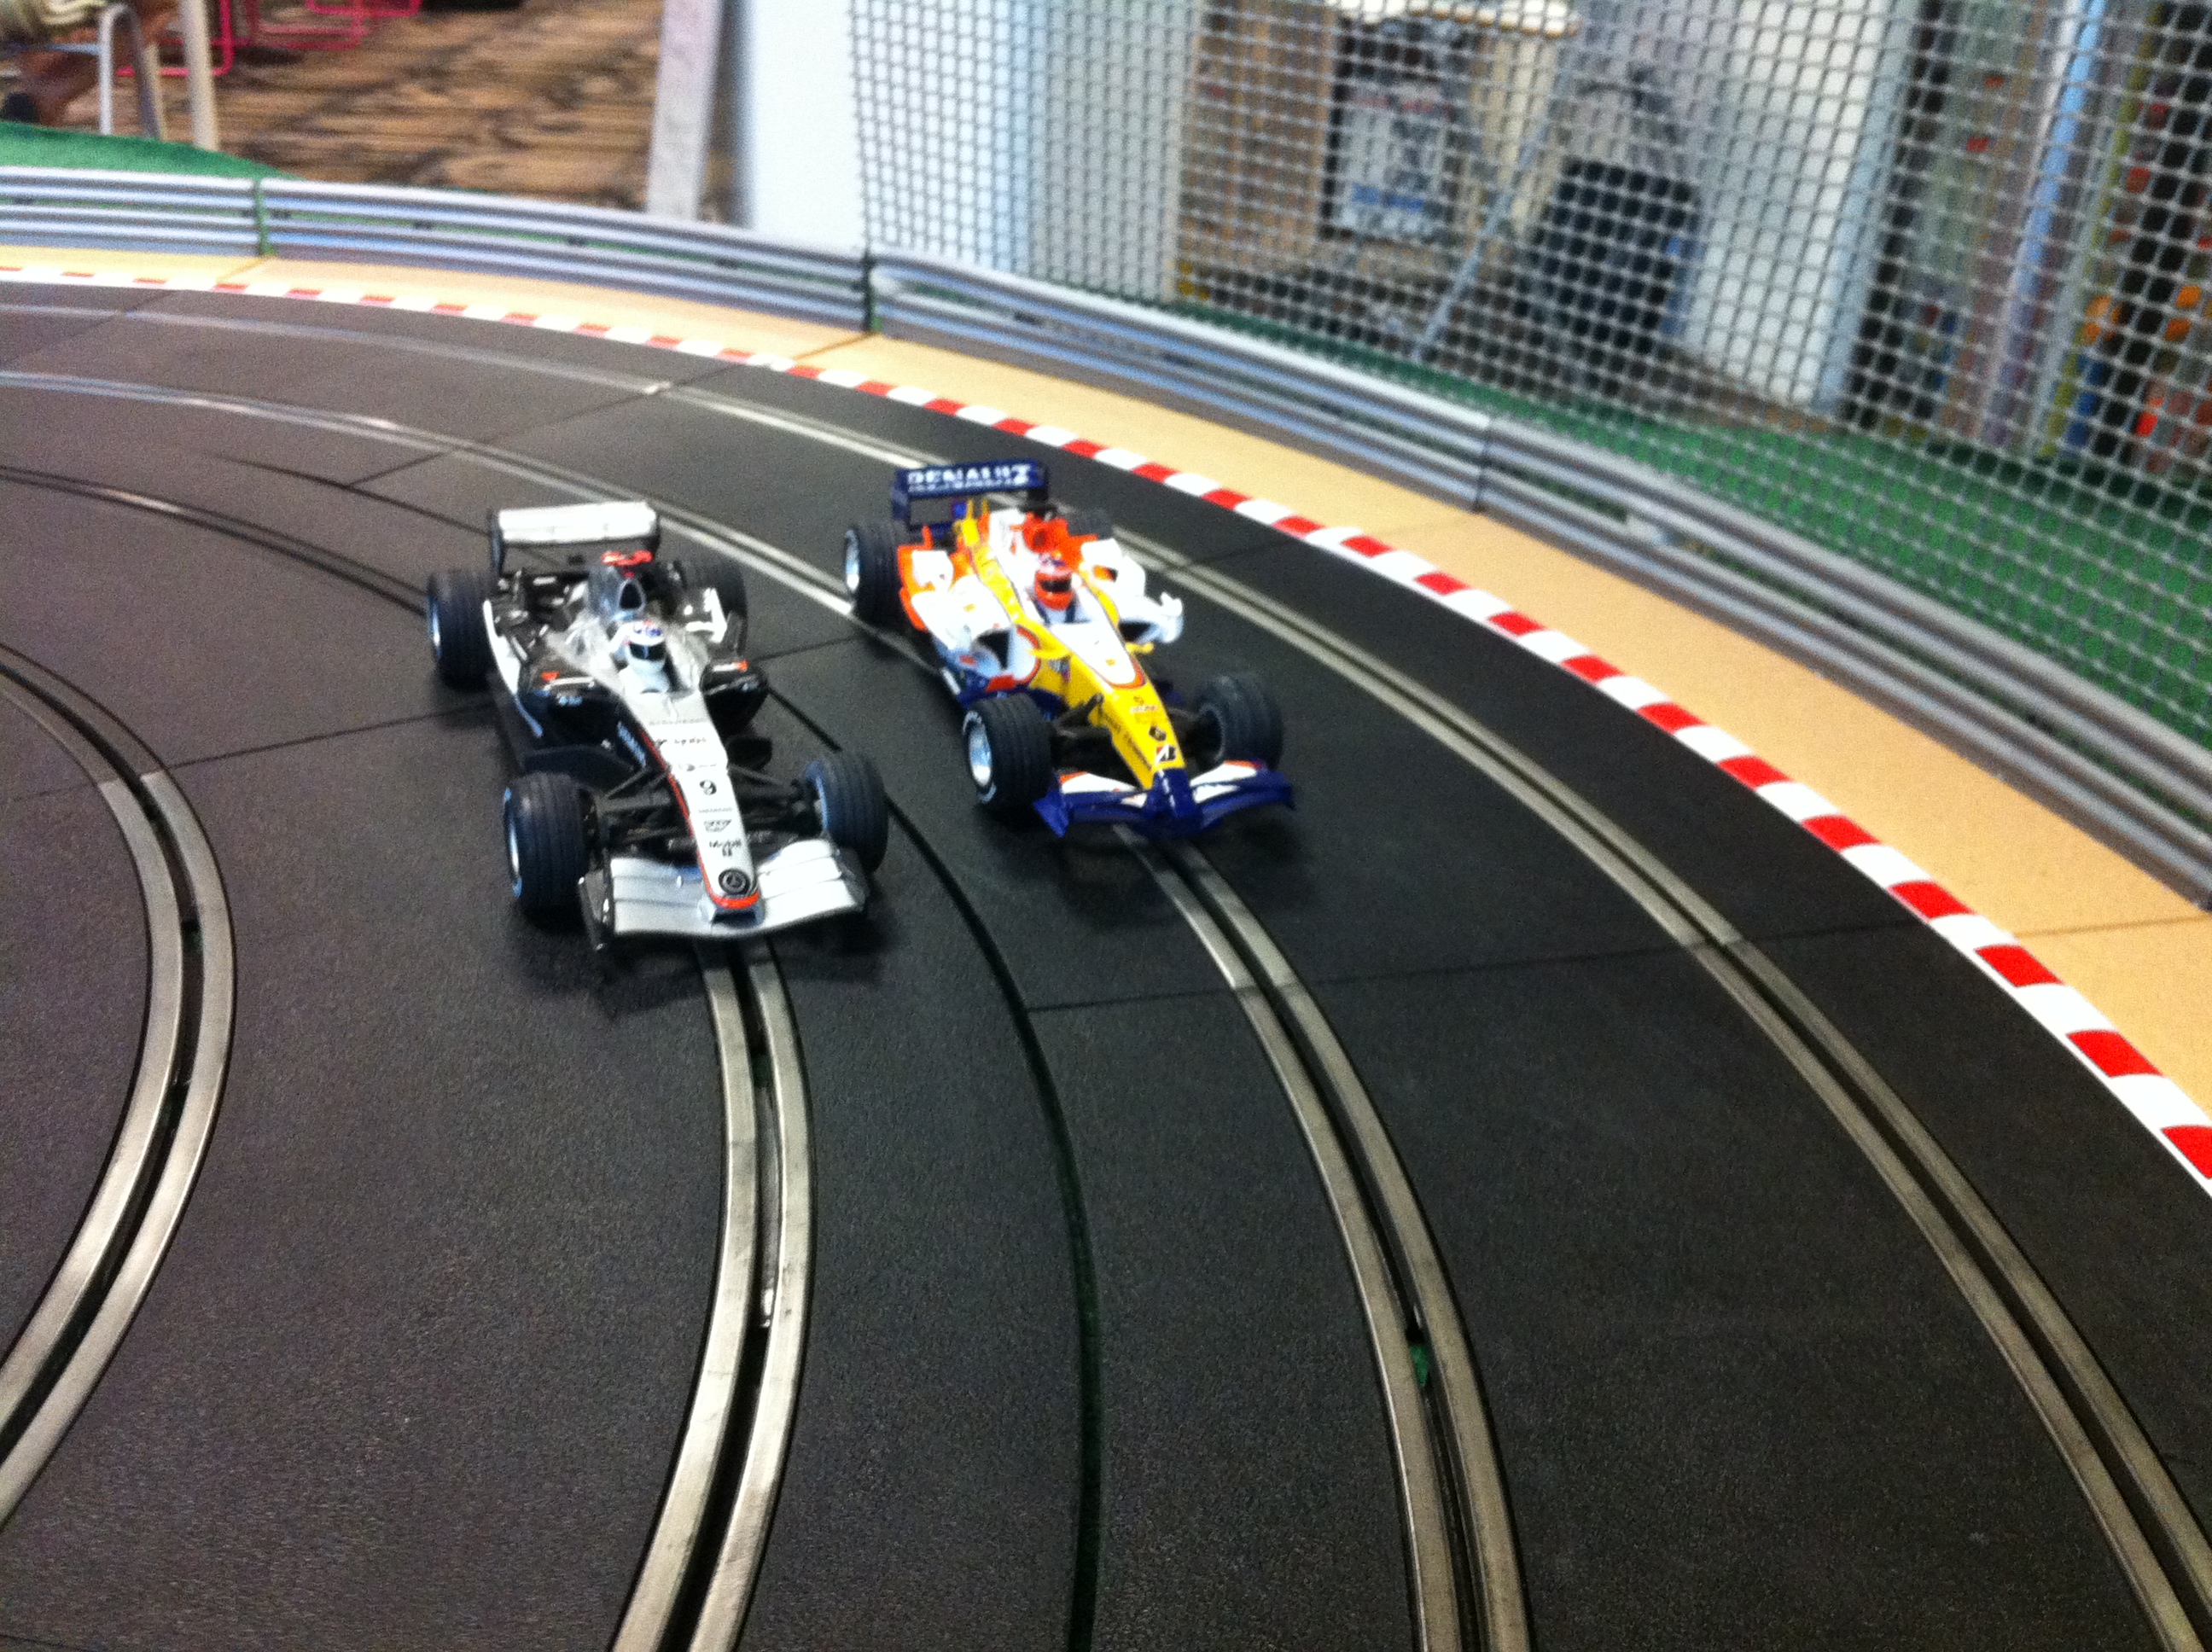 remote control race car tracks